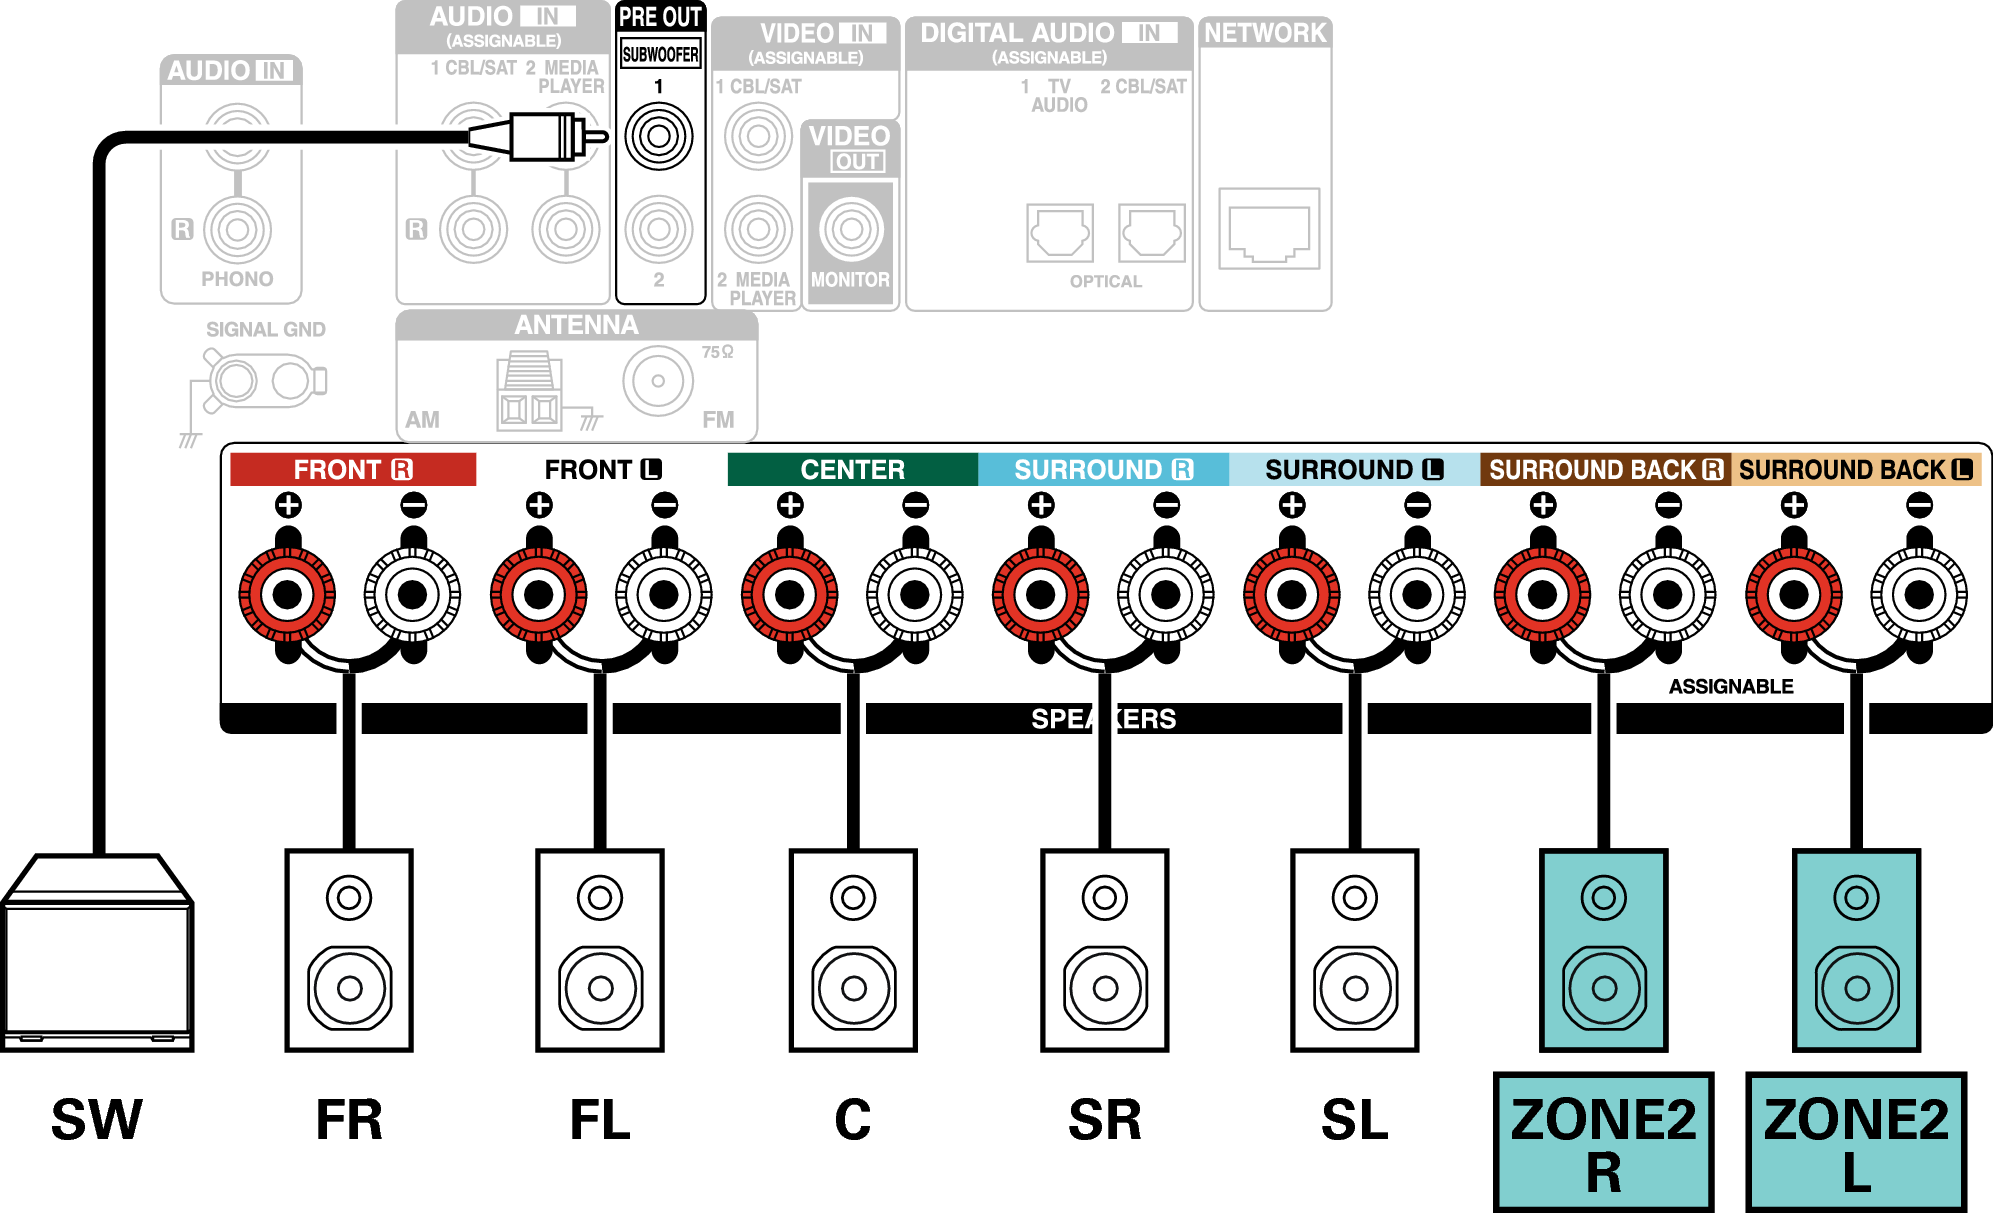 Conne SP 5.1 ZONE2 X15JP